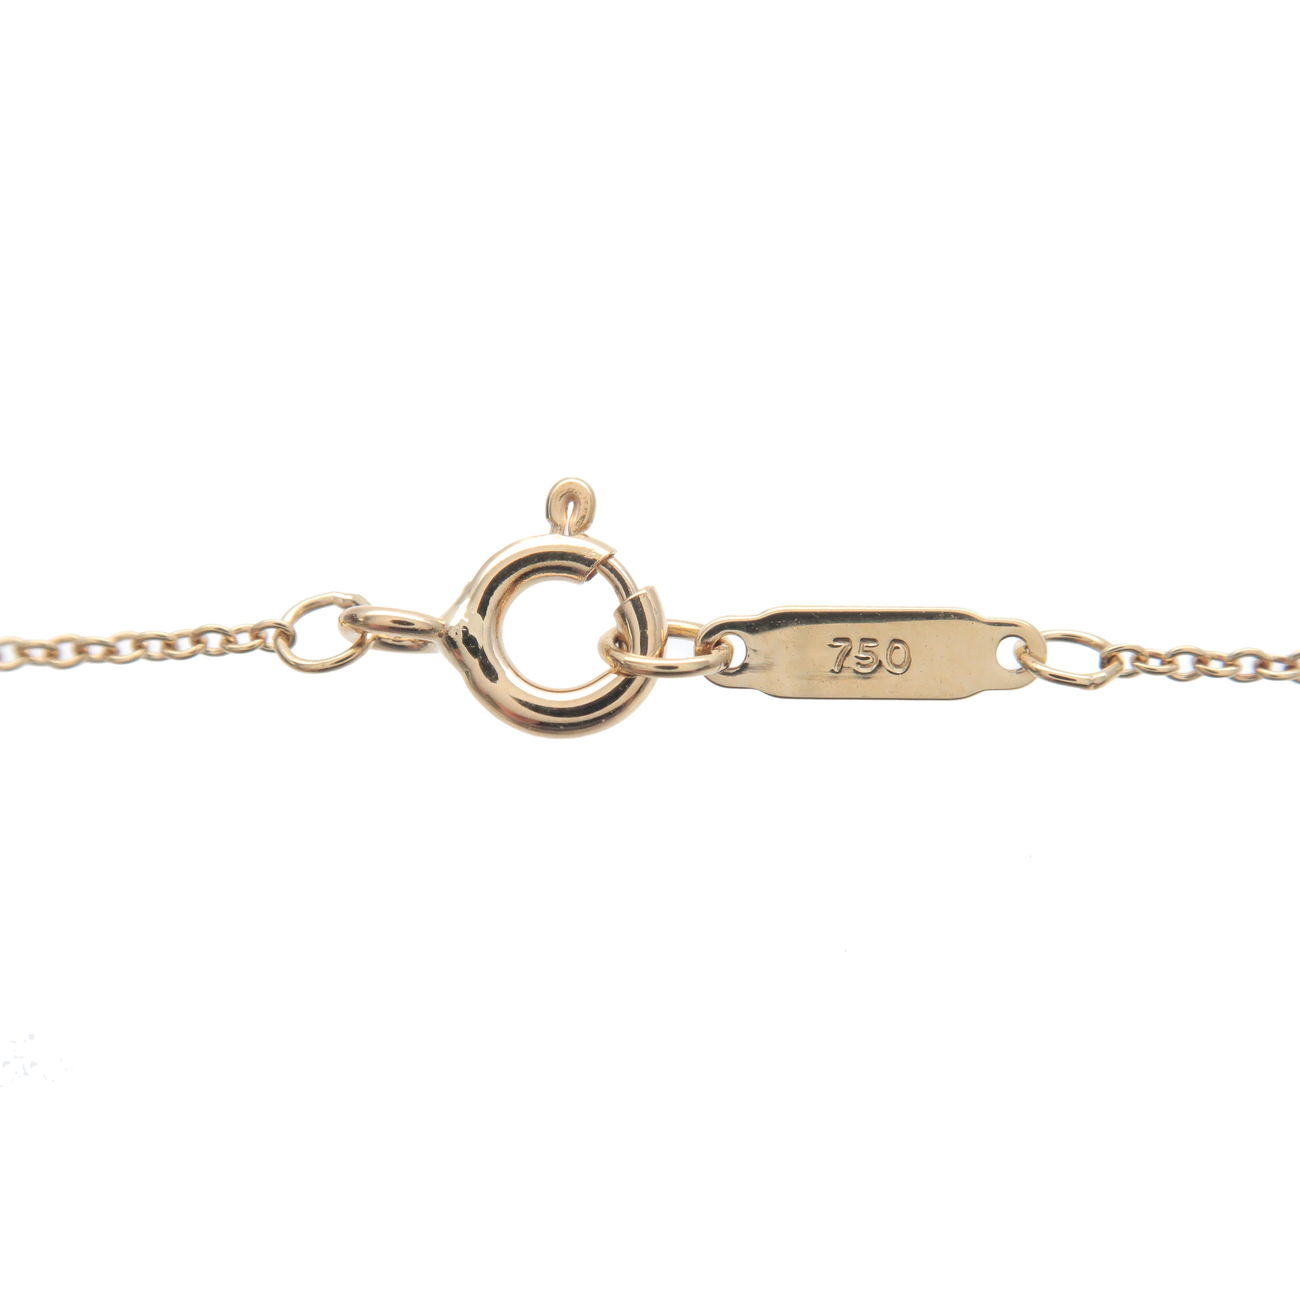 Tiffany & Co. Return to Tiffany Heart Tag Necklace K18 Yellow Gold